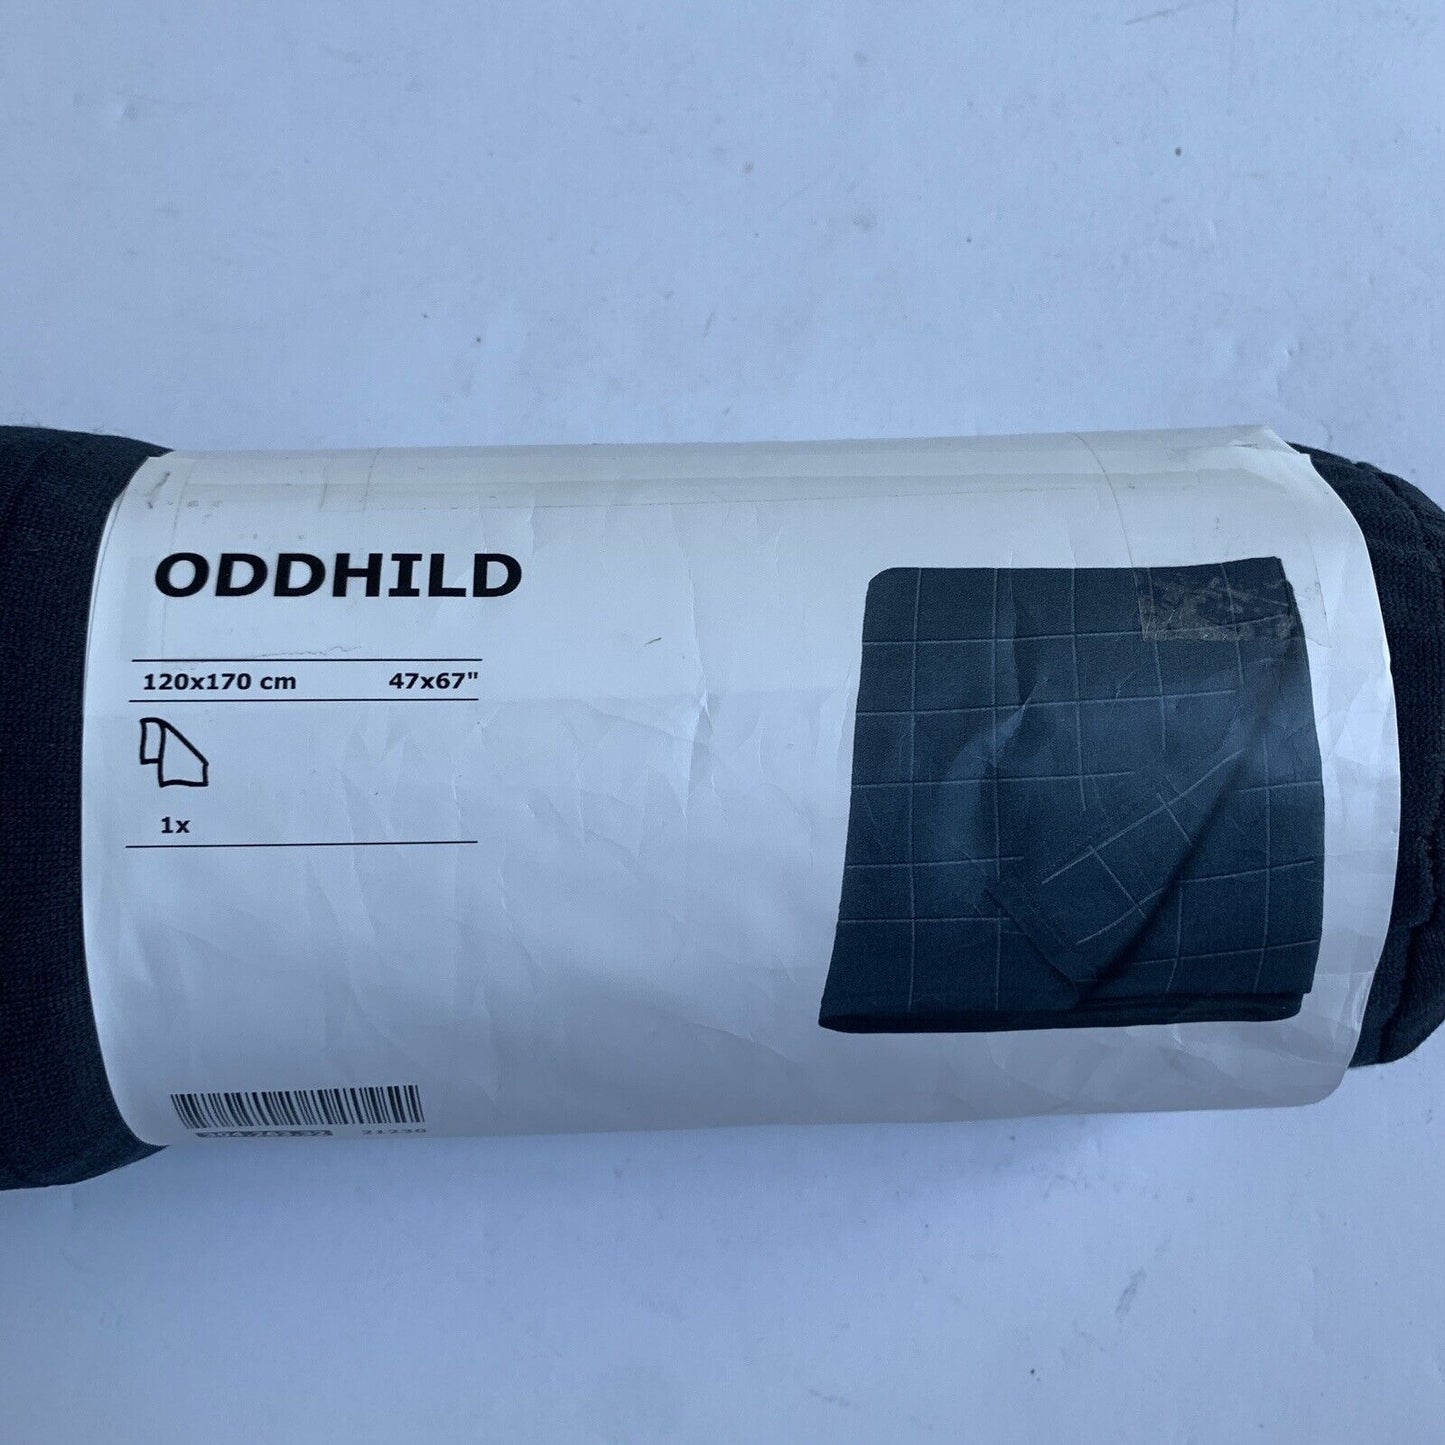 Ikea Oddhild Throw Blanket NAVY New in Package 47 x 67"